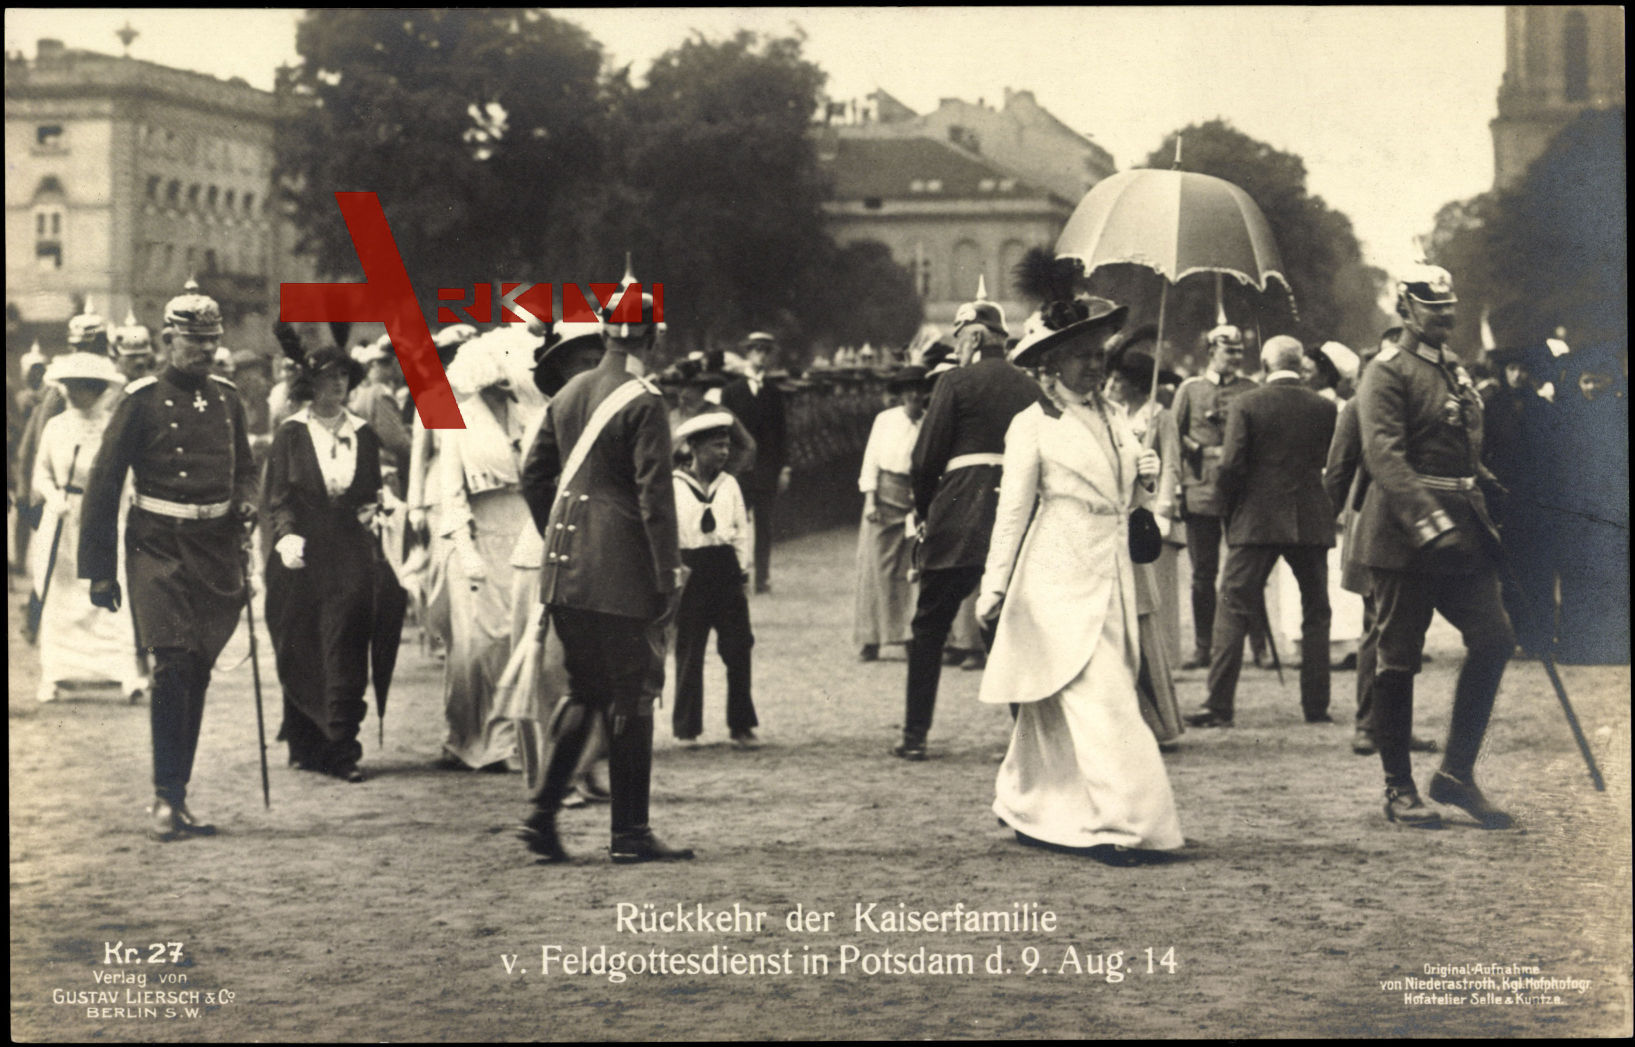 Rückkehr der Kaiserfamilie v. Feldgottesdienst in Potsdam August 1914